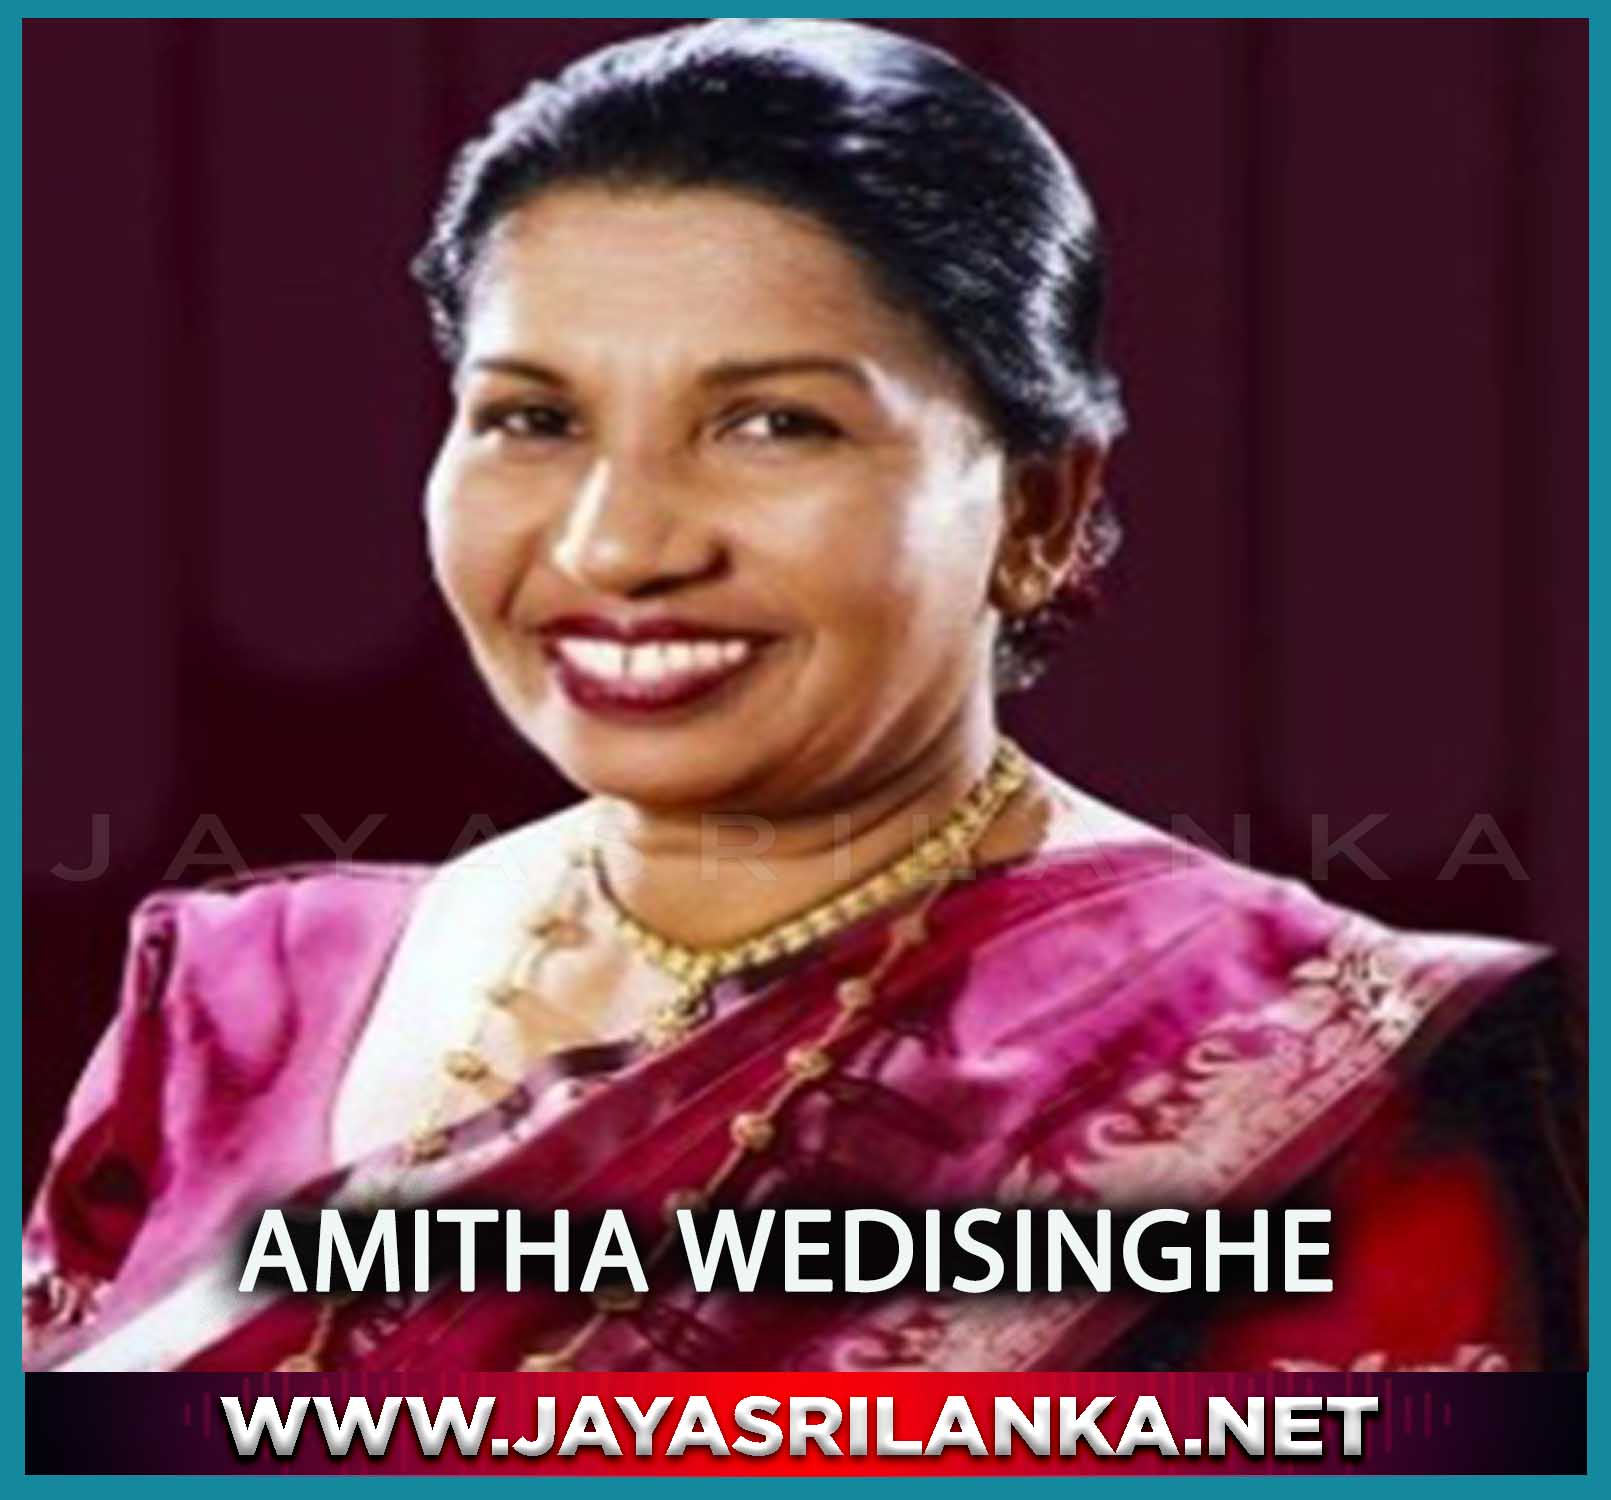 Me Udara Lanka Bhoomiyai - Amitha Wedisinghe mp3 Image